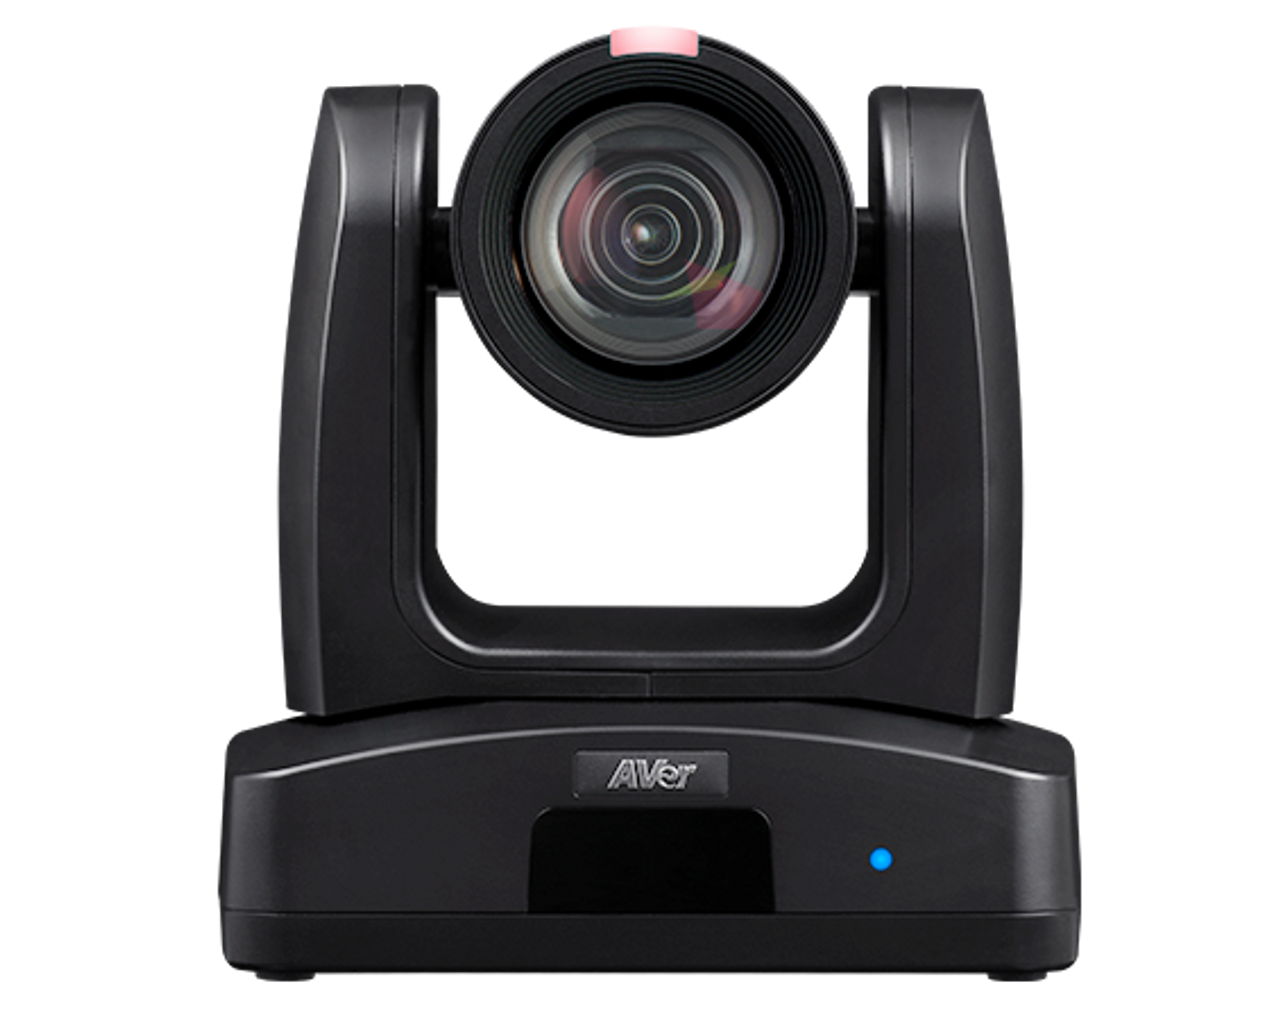 Aver PTC310UV2 4K 12x Optical AI Auto Tracking PoE+ PTZ Camera